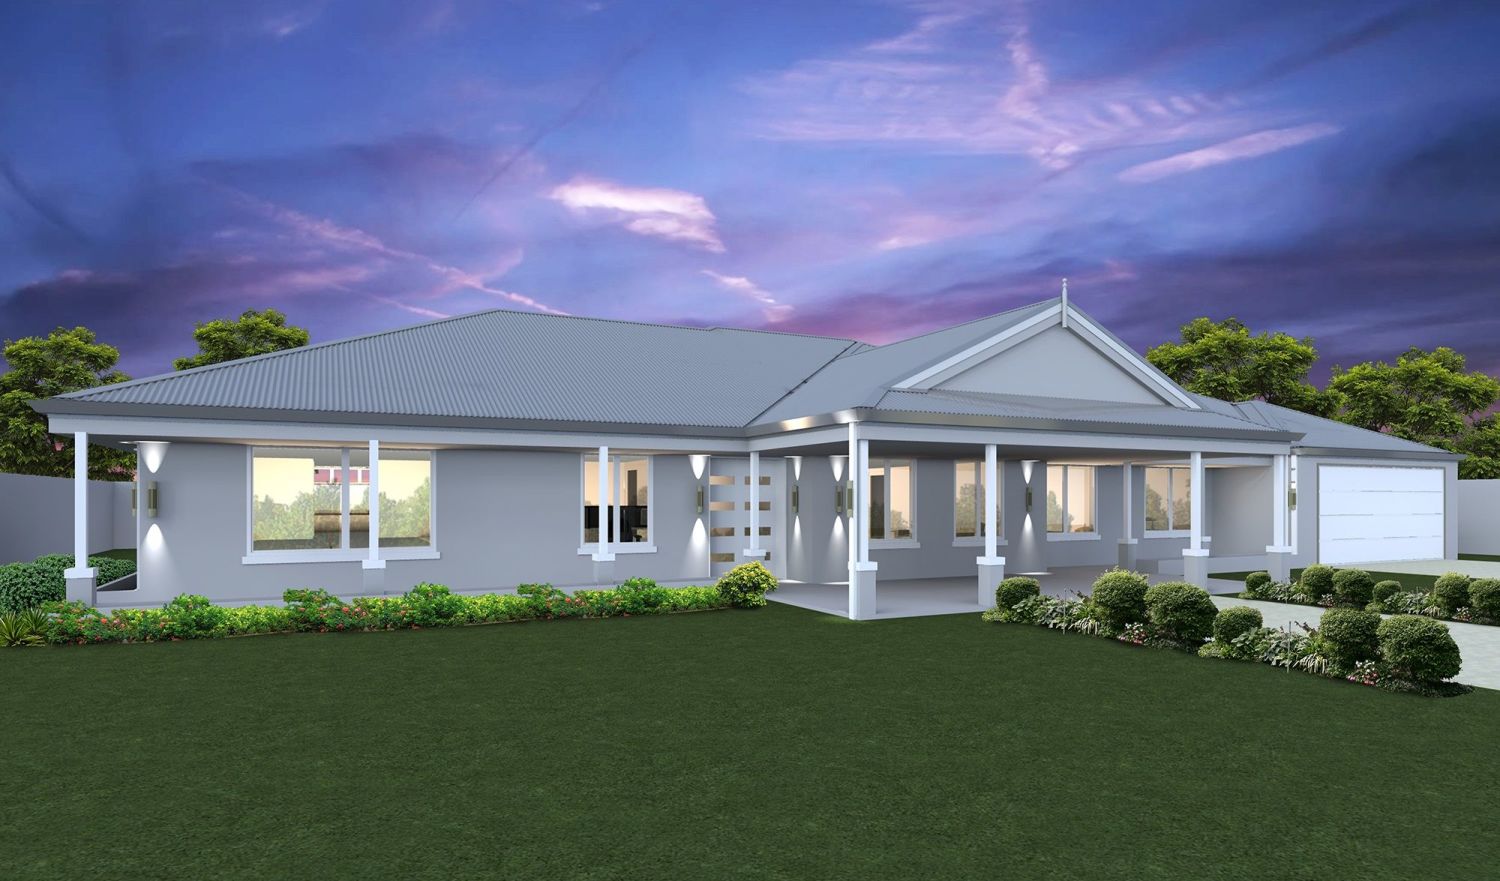 Home Designs Online Australia Buy Rural Home Designs In